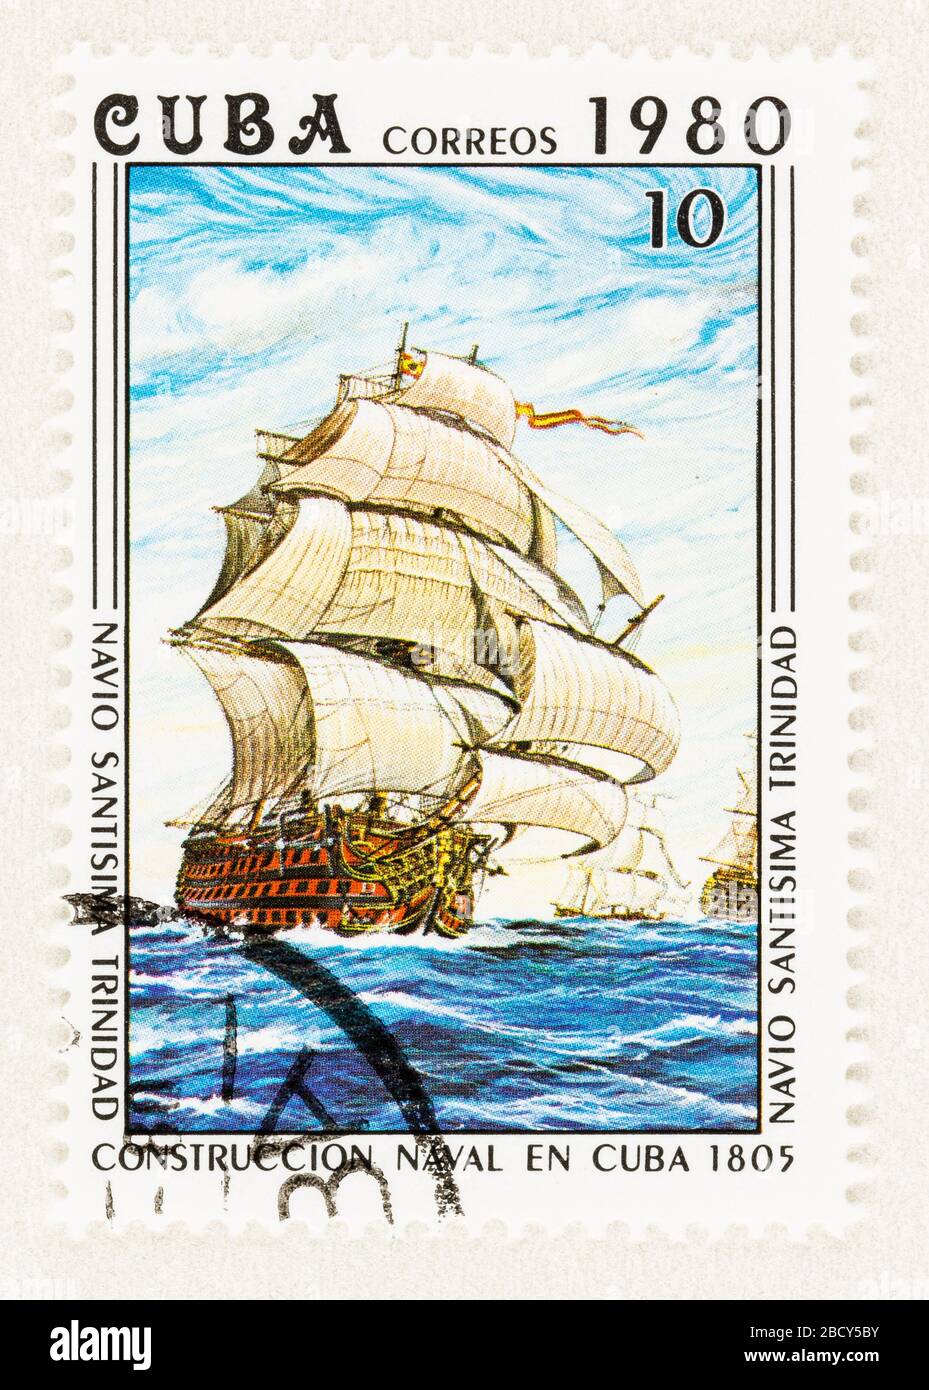 SEATTLE WASHINGTON - April 2, 2020: Close up of historic Santisima Trinidad ship on Cuban postage stamp. Scott # 2349 Stock Photo